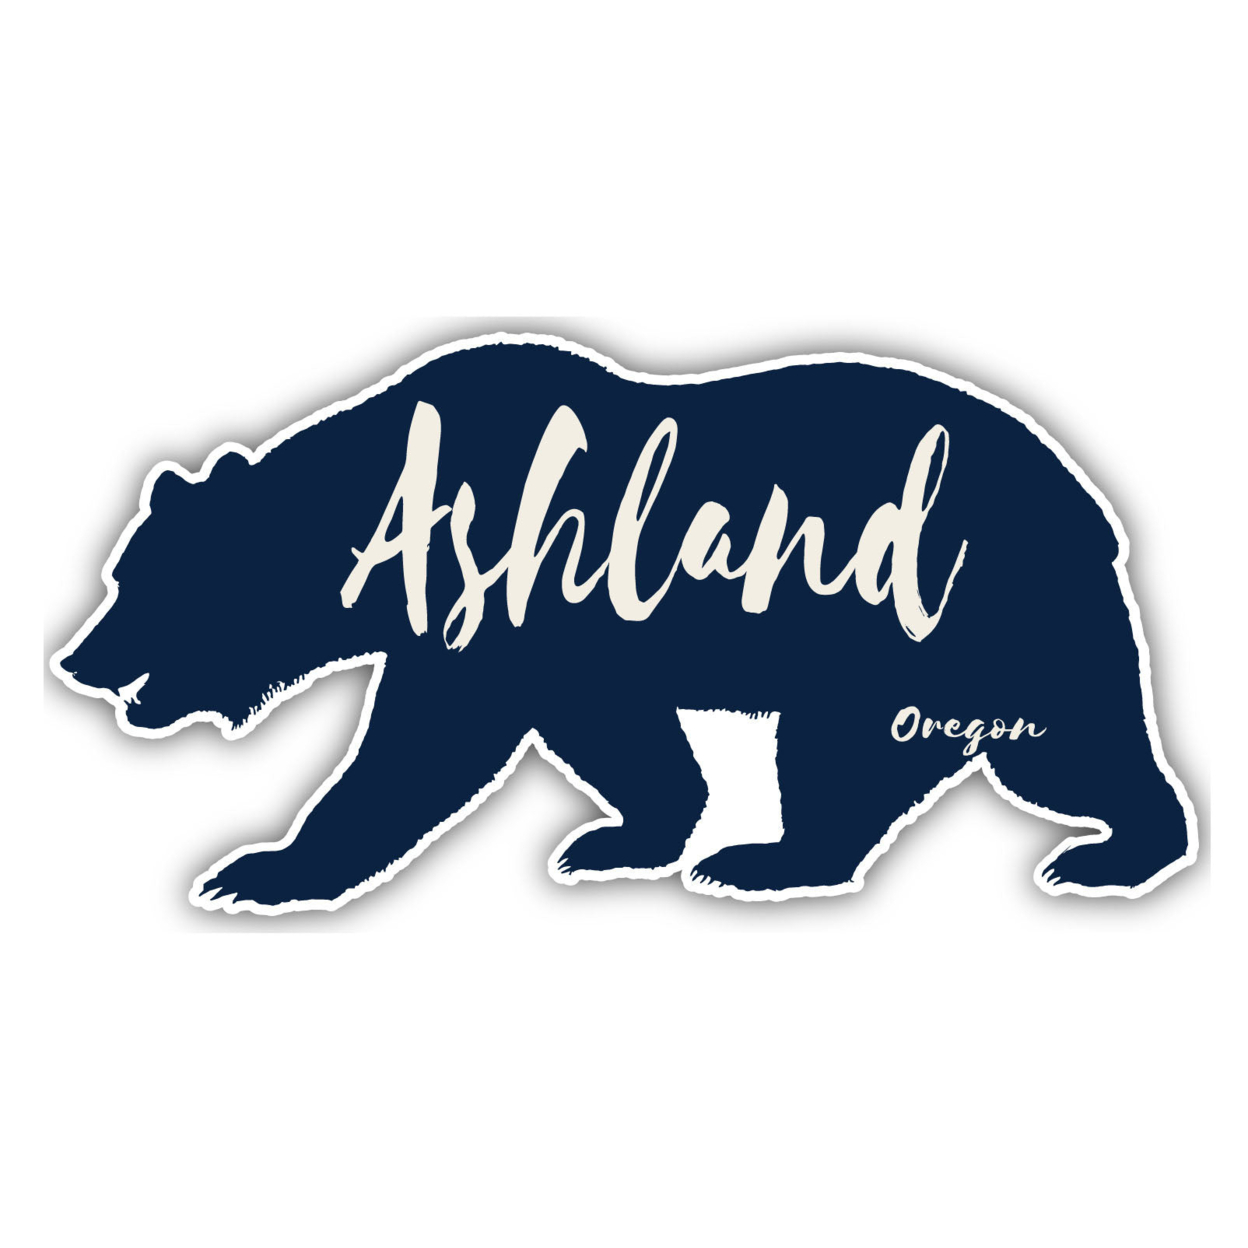 Ashland Oregon Souvenir Decorative Stickers (Choose Theme And Size) - 4-Pack, 6-Inch, Tent